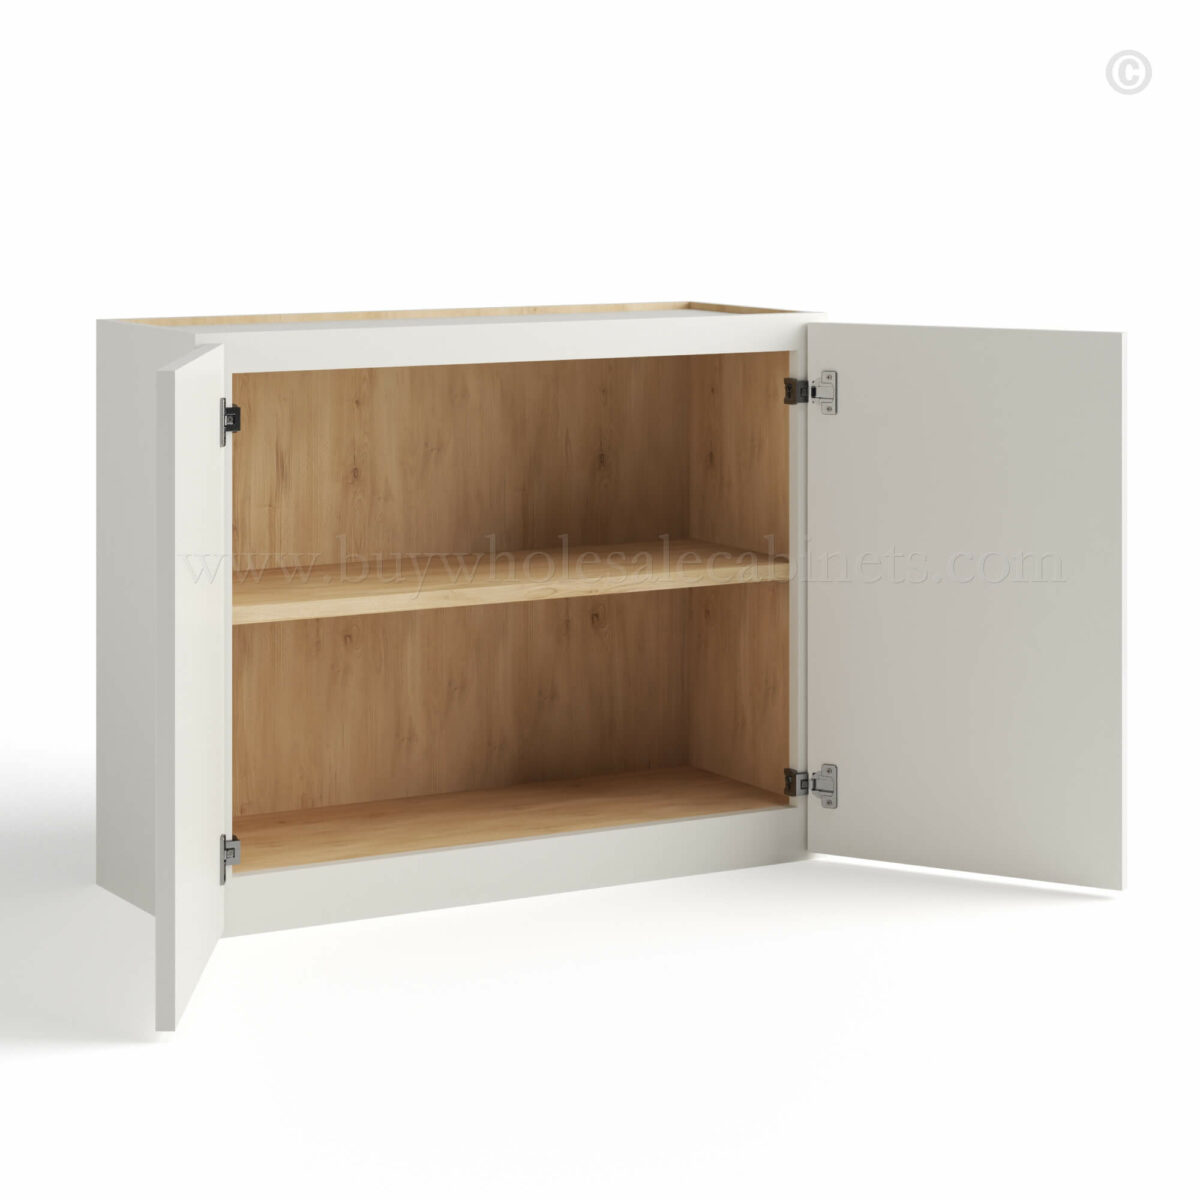 slim shaker cabinets, Dove White Slim Shaker Wall Stove Microwave Bridge Double Door Cabinet